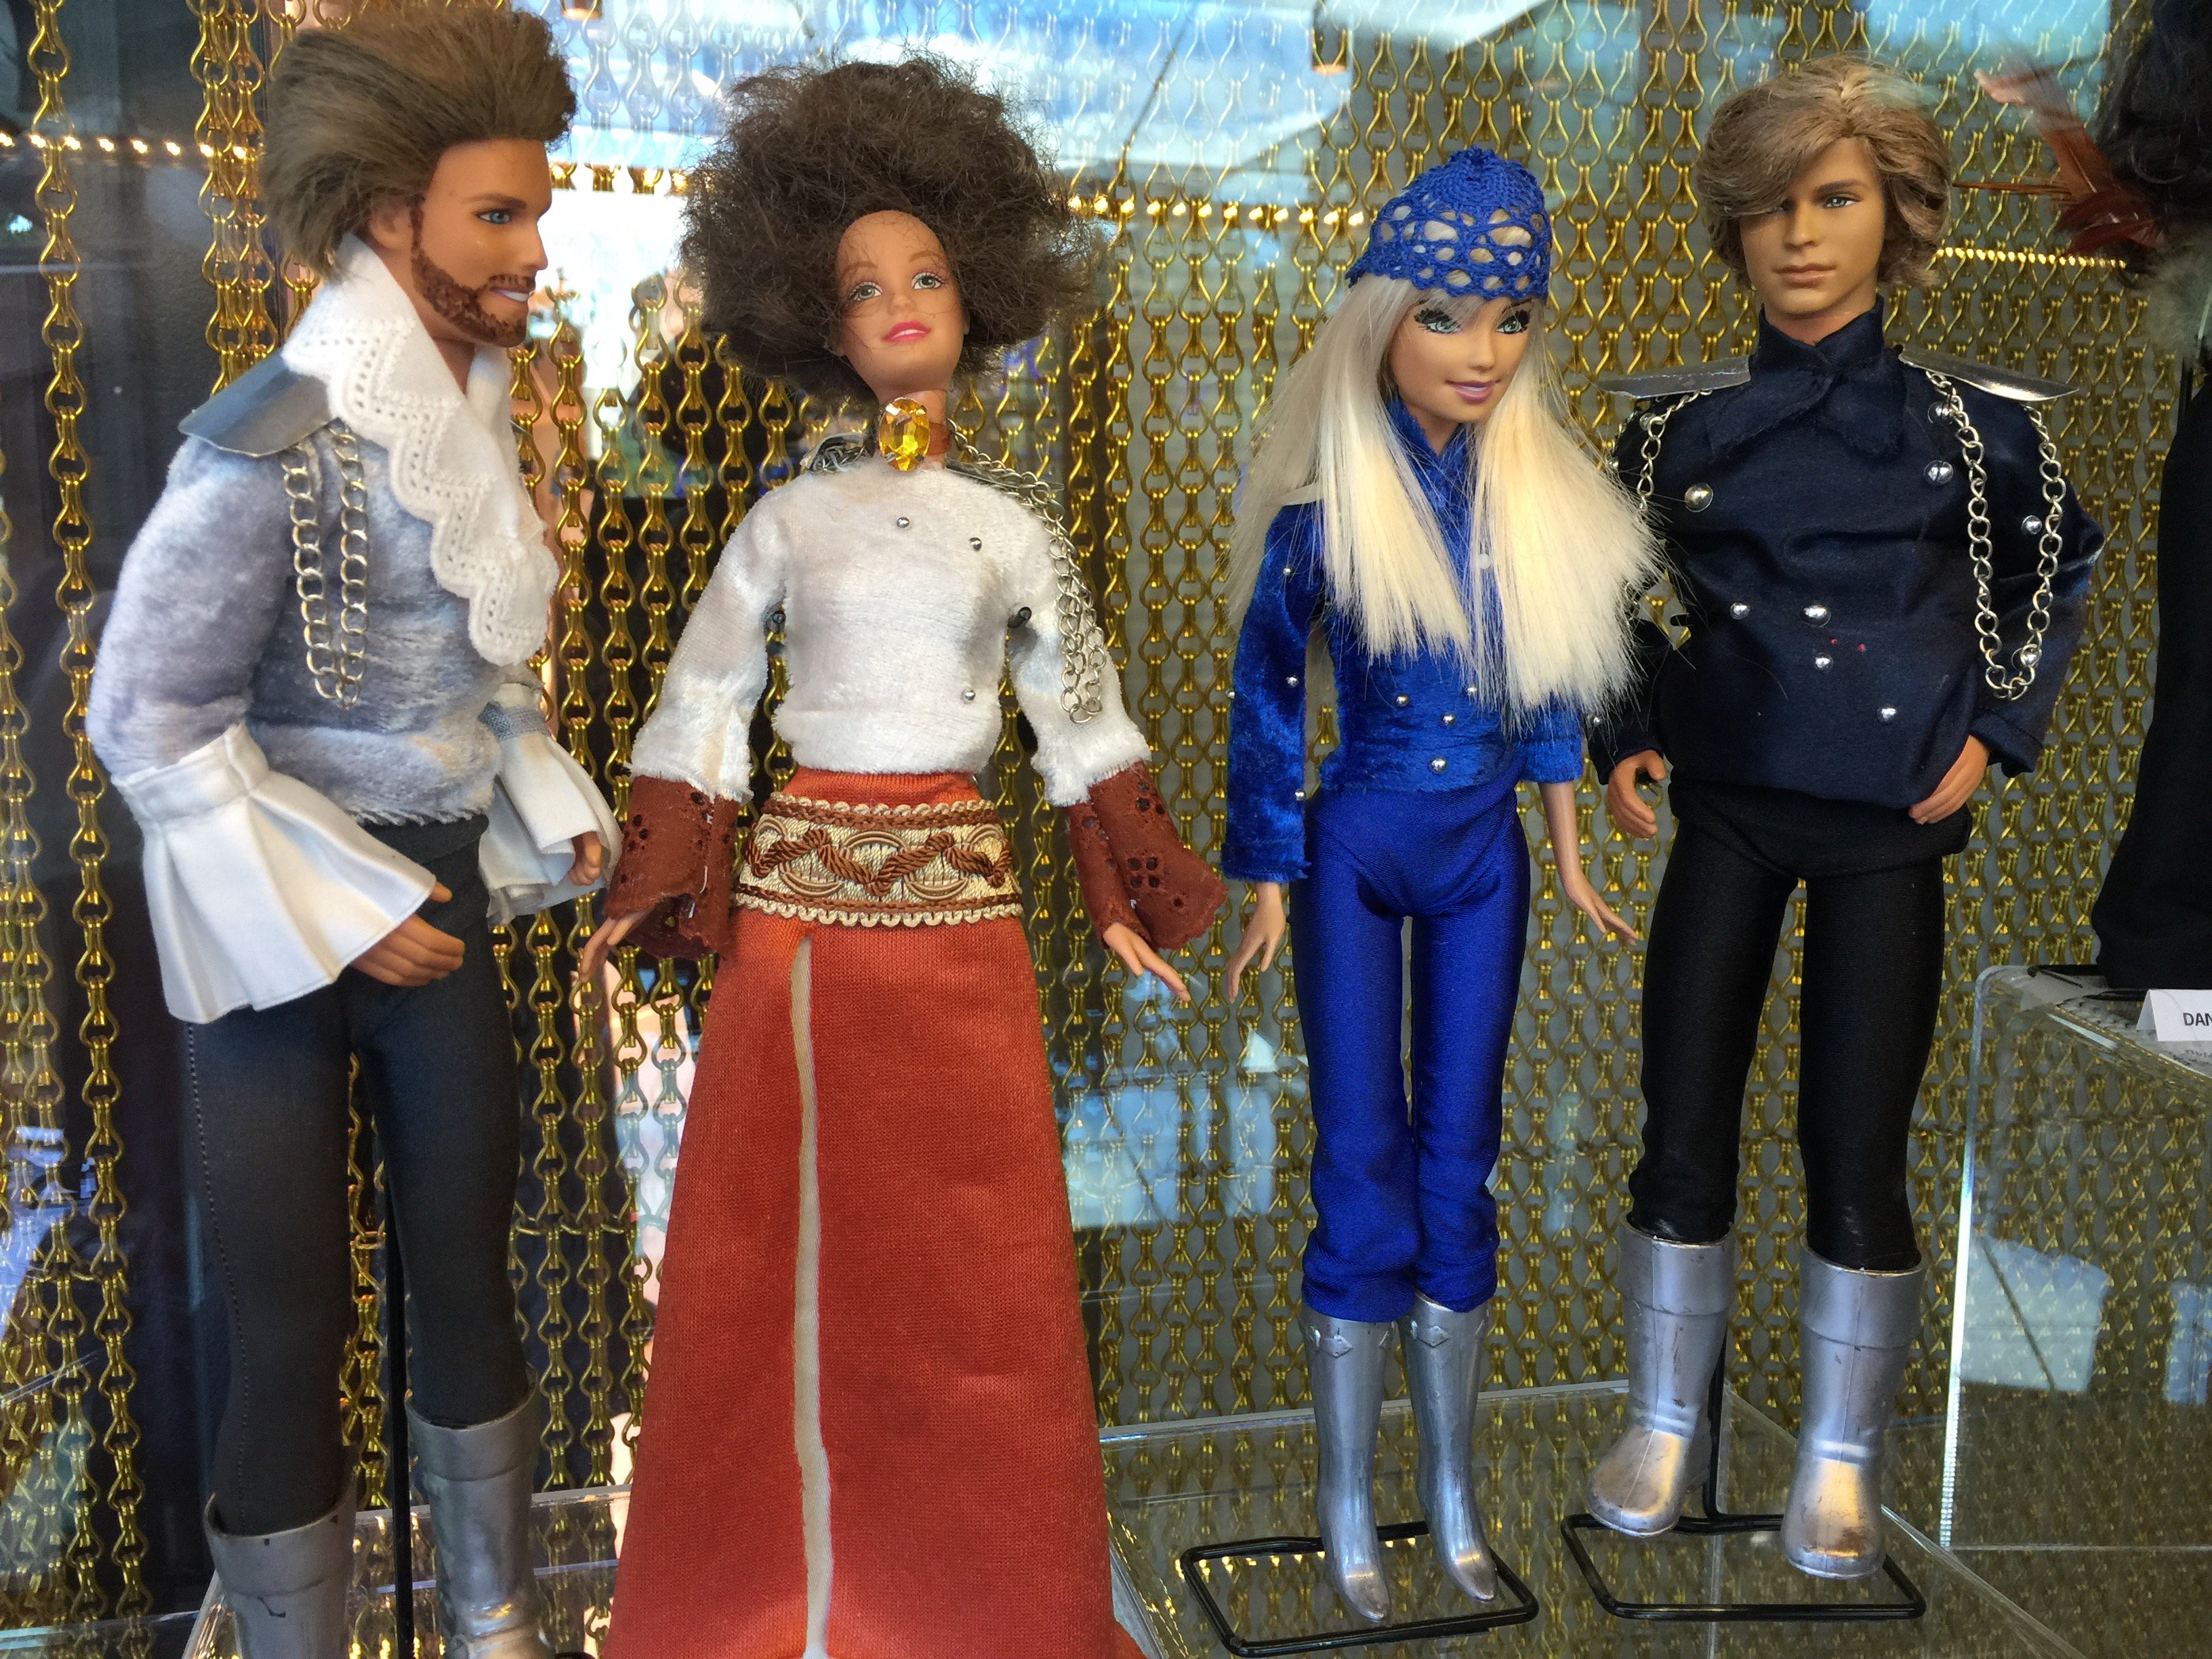 Resultaat cursief schaal Clara Vulliamy on Twitter: "@RachLilBC You MUST go... ABBA barbie dolls!  https://t.co/1uTzI9W46R" / Twitter